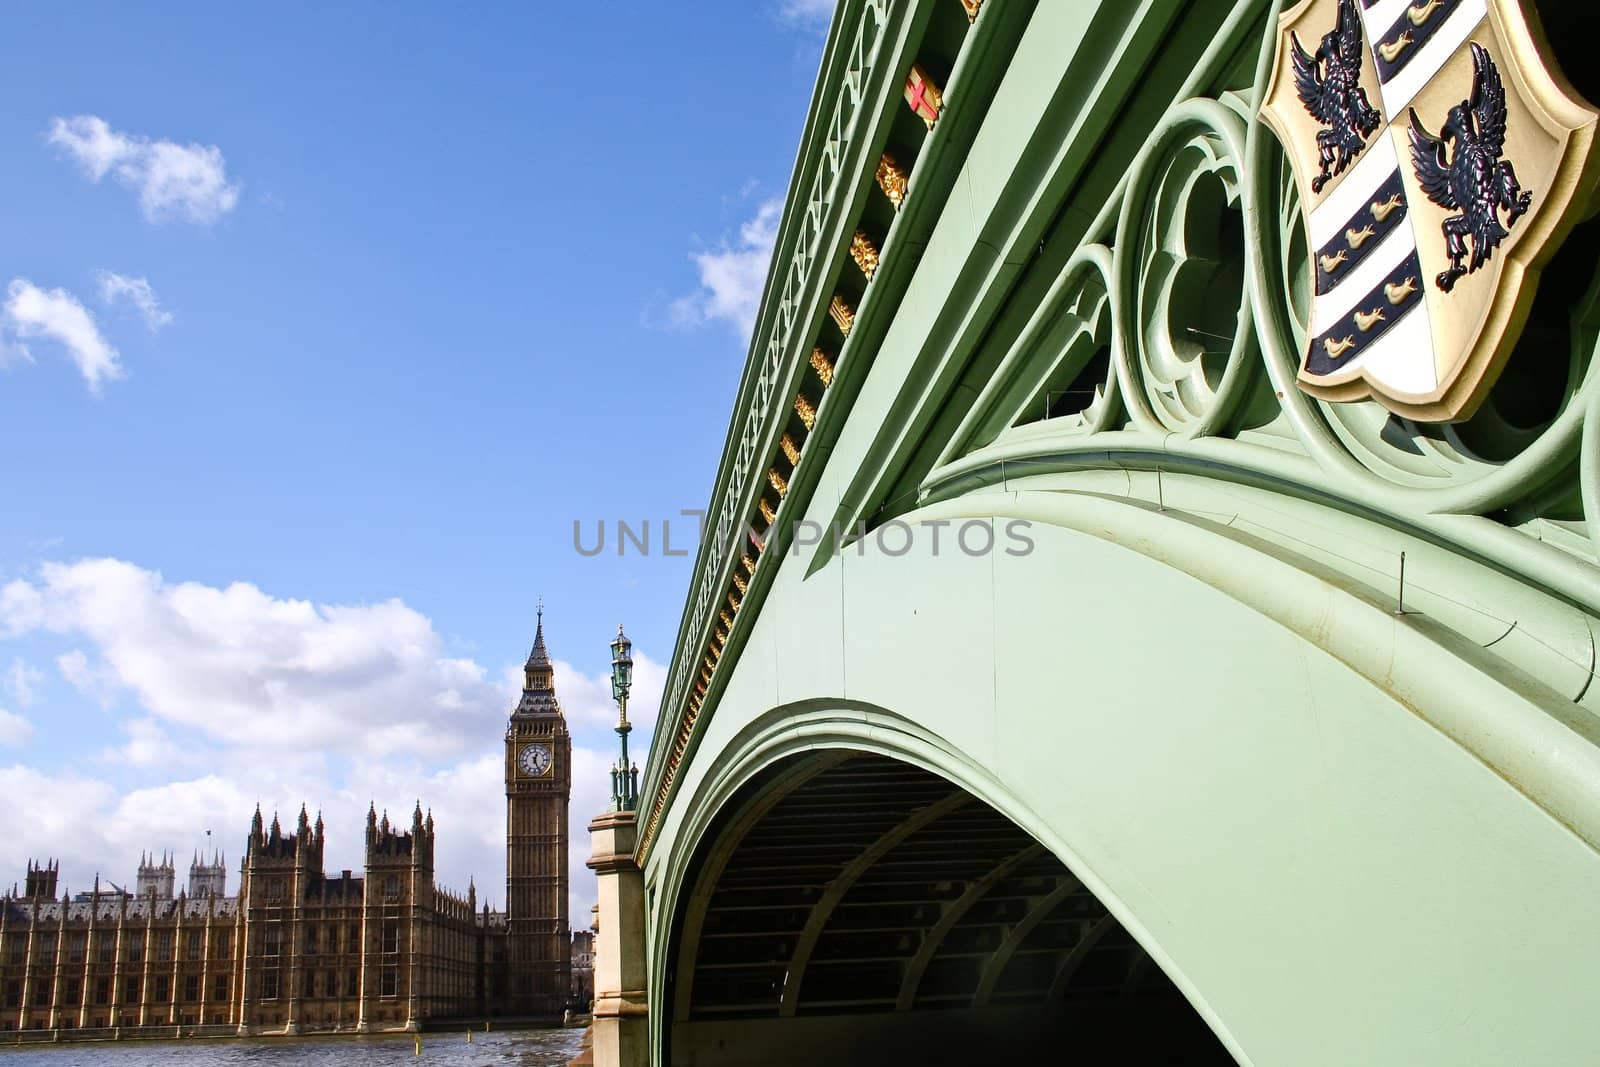 Parliament and bridge, London, England by nikolpetr